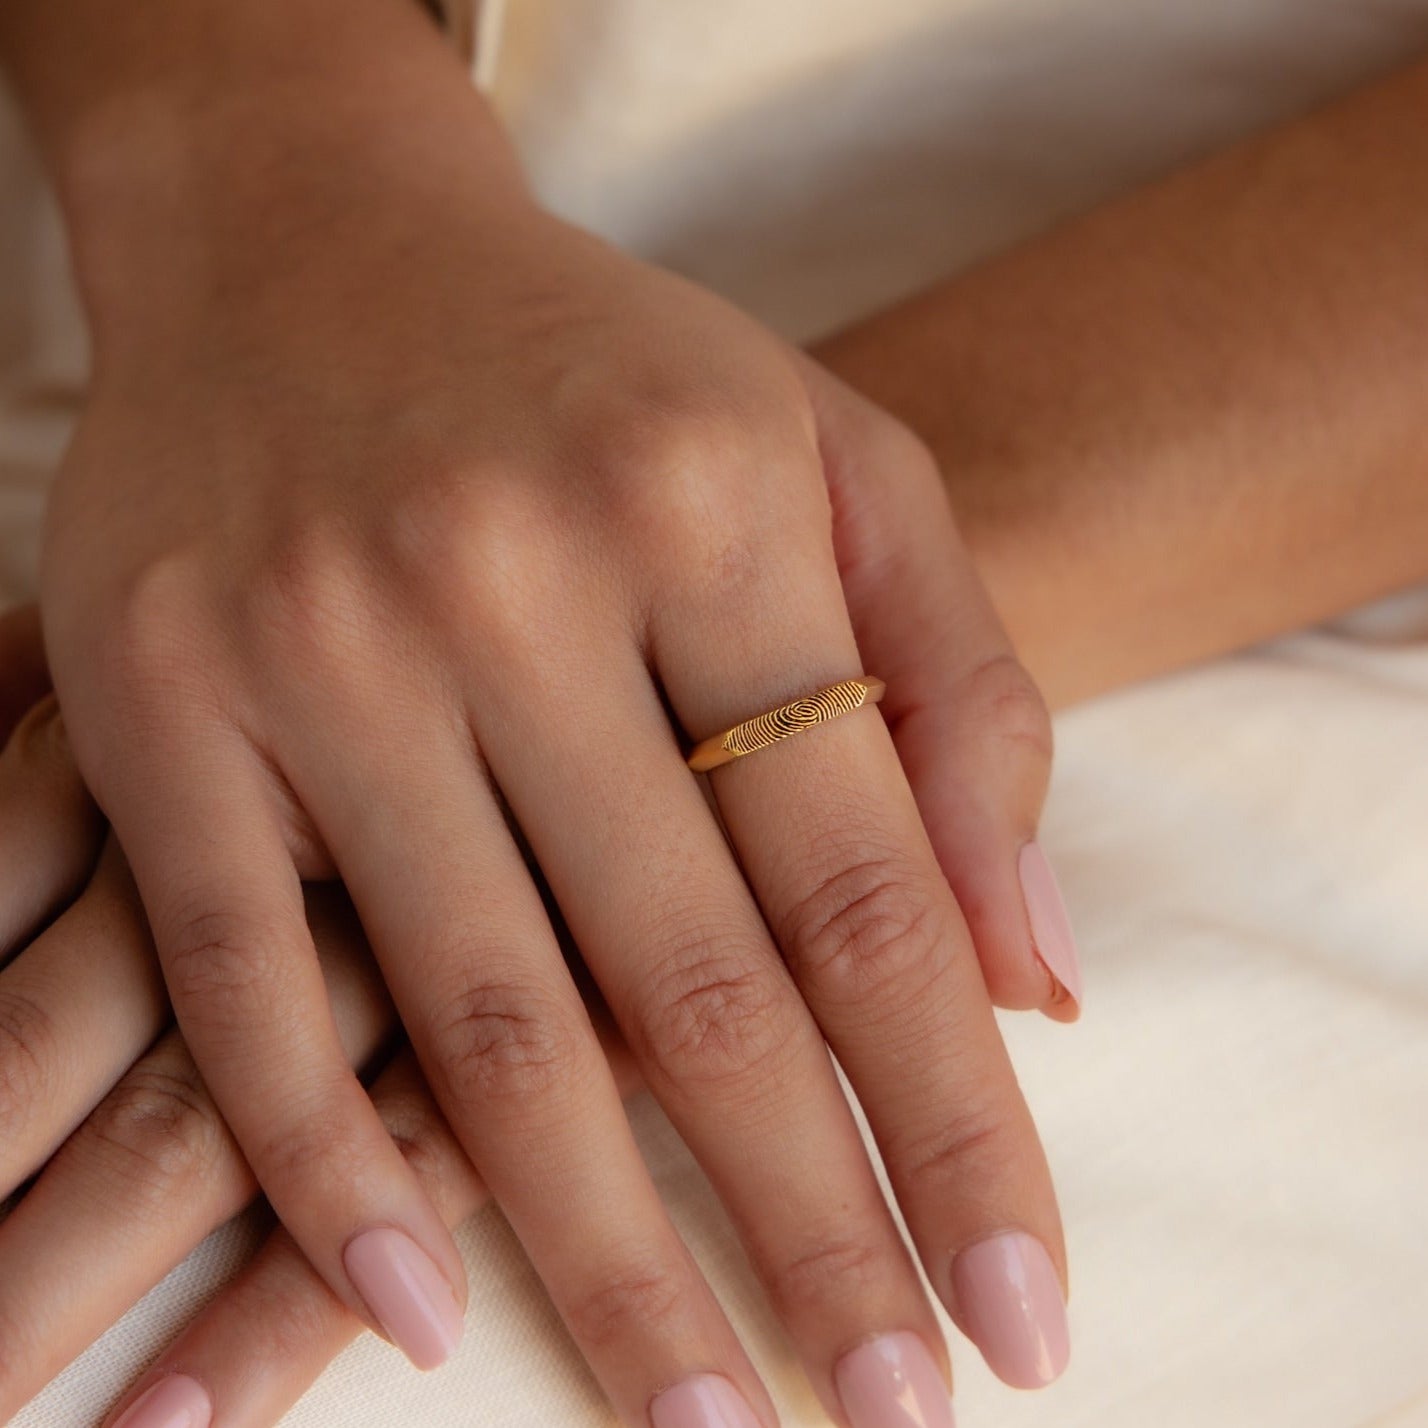 Minimalist Silver/Gold/Rose Gold Fingerprint Ring at Rs 650 in Jaipur